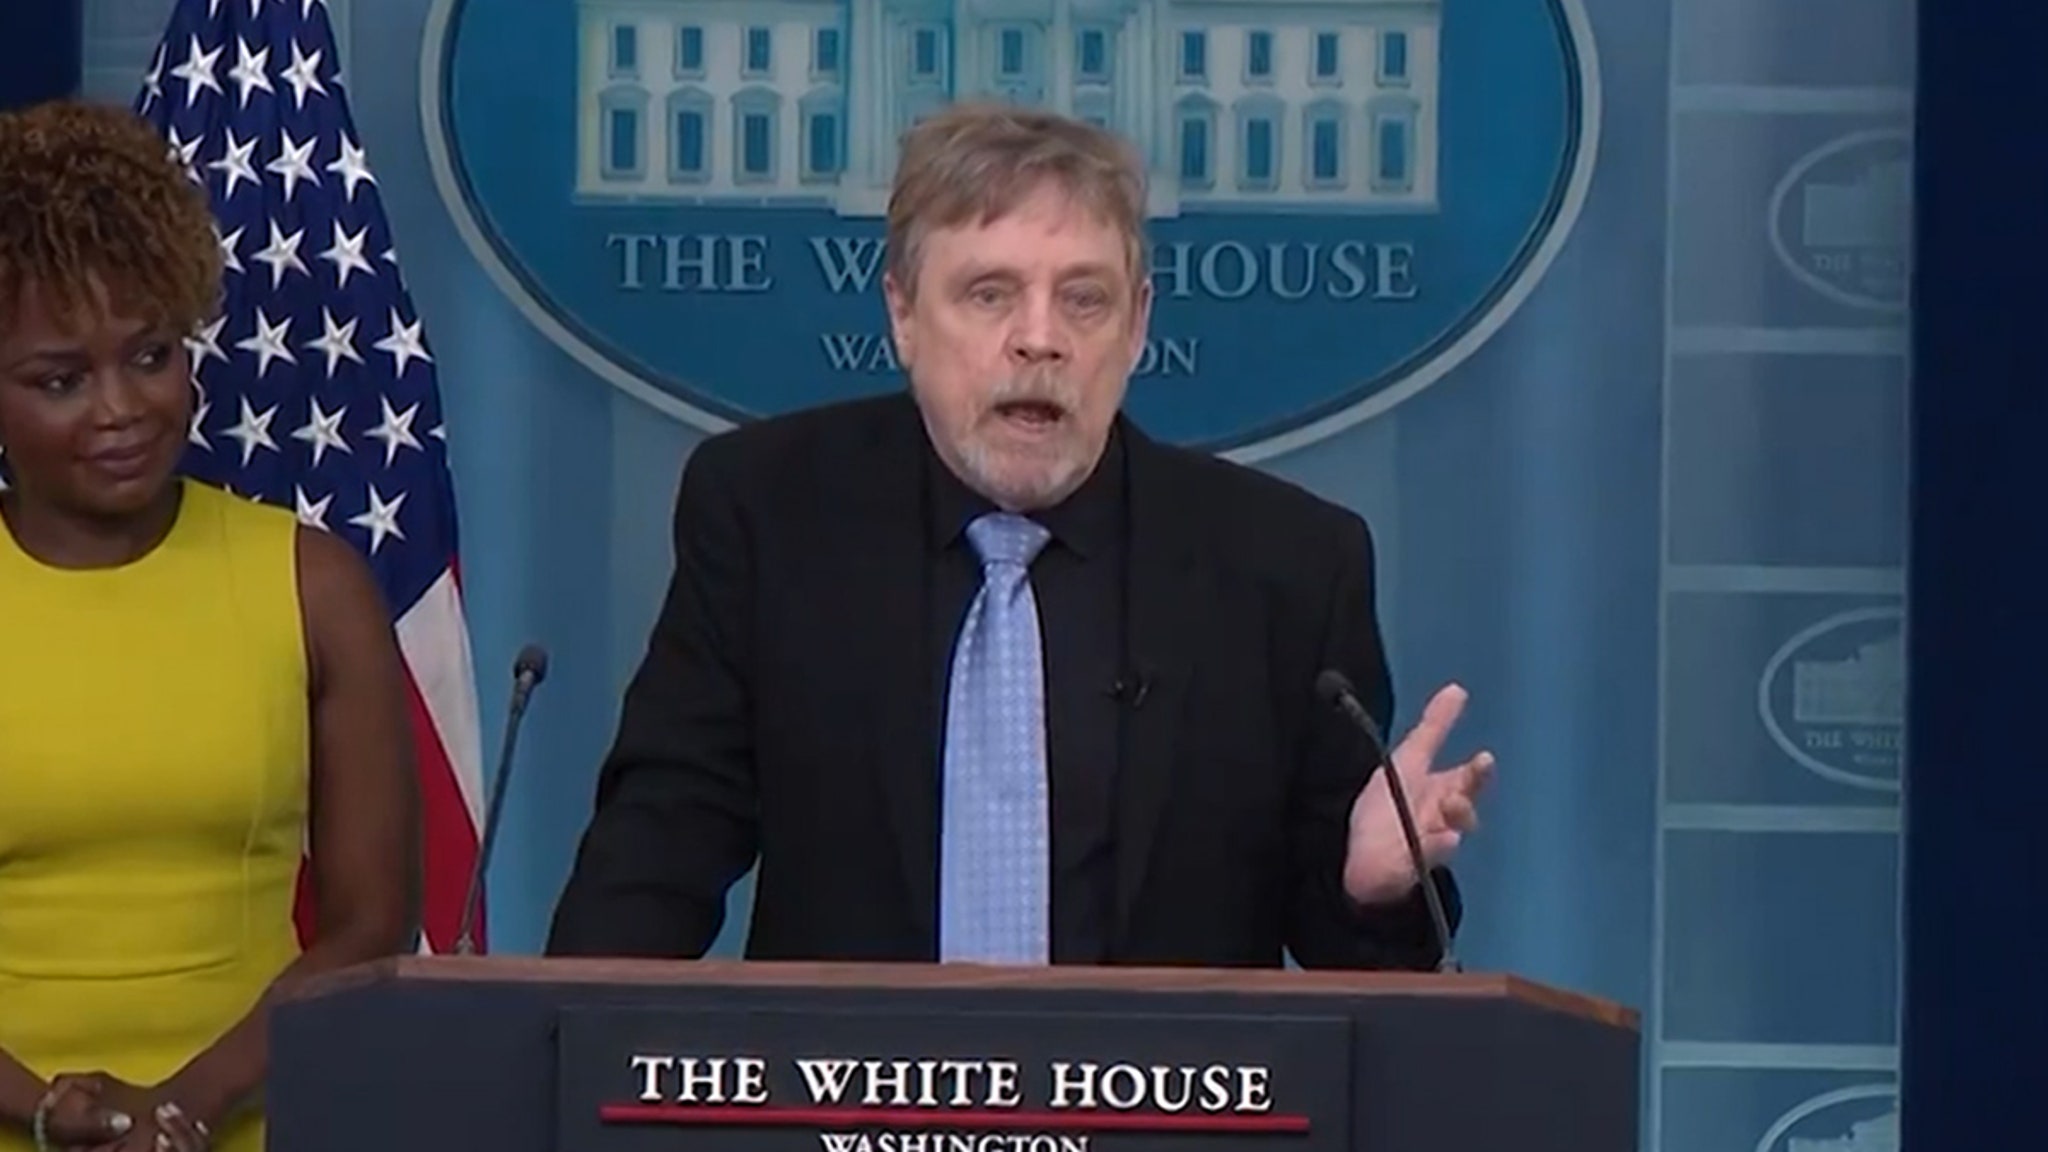 Mark Hamill Appears at White House Briefing, Calls Biden 'Joe-B-Wan Kenobi'